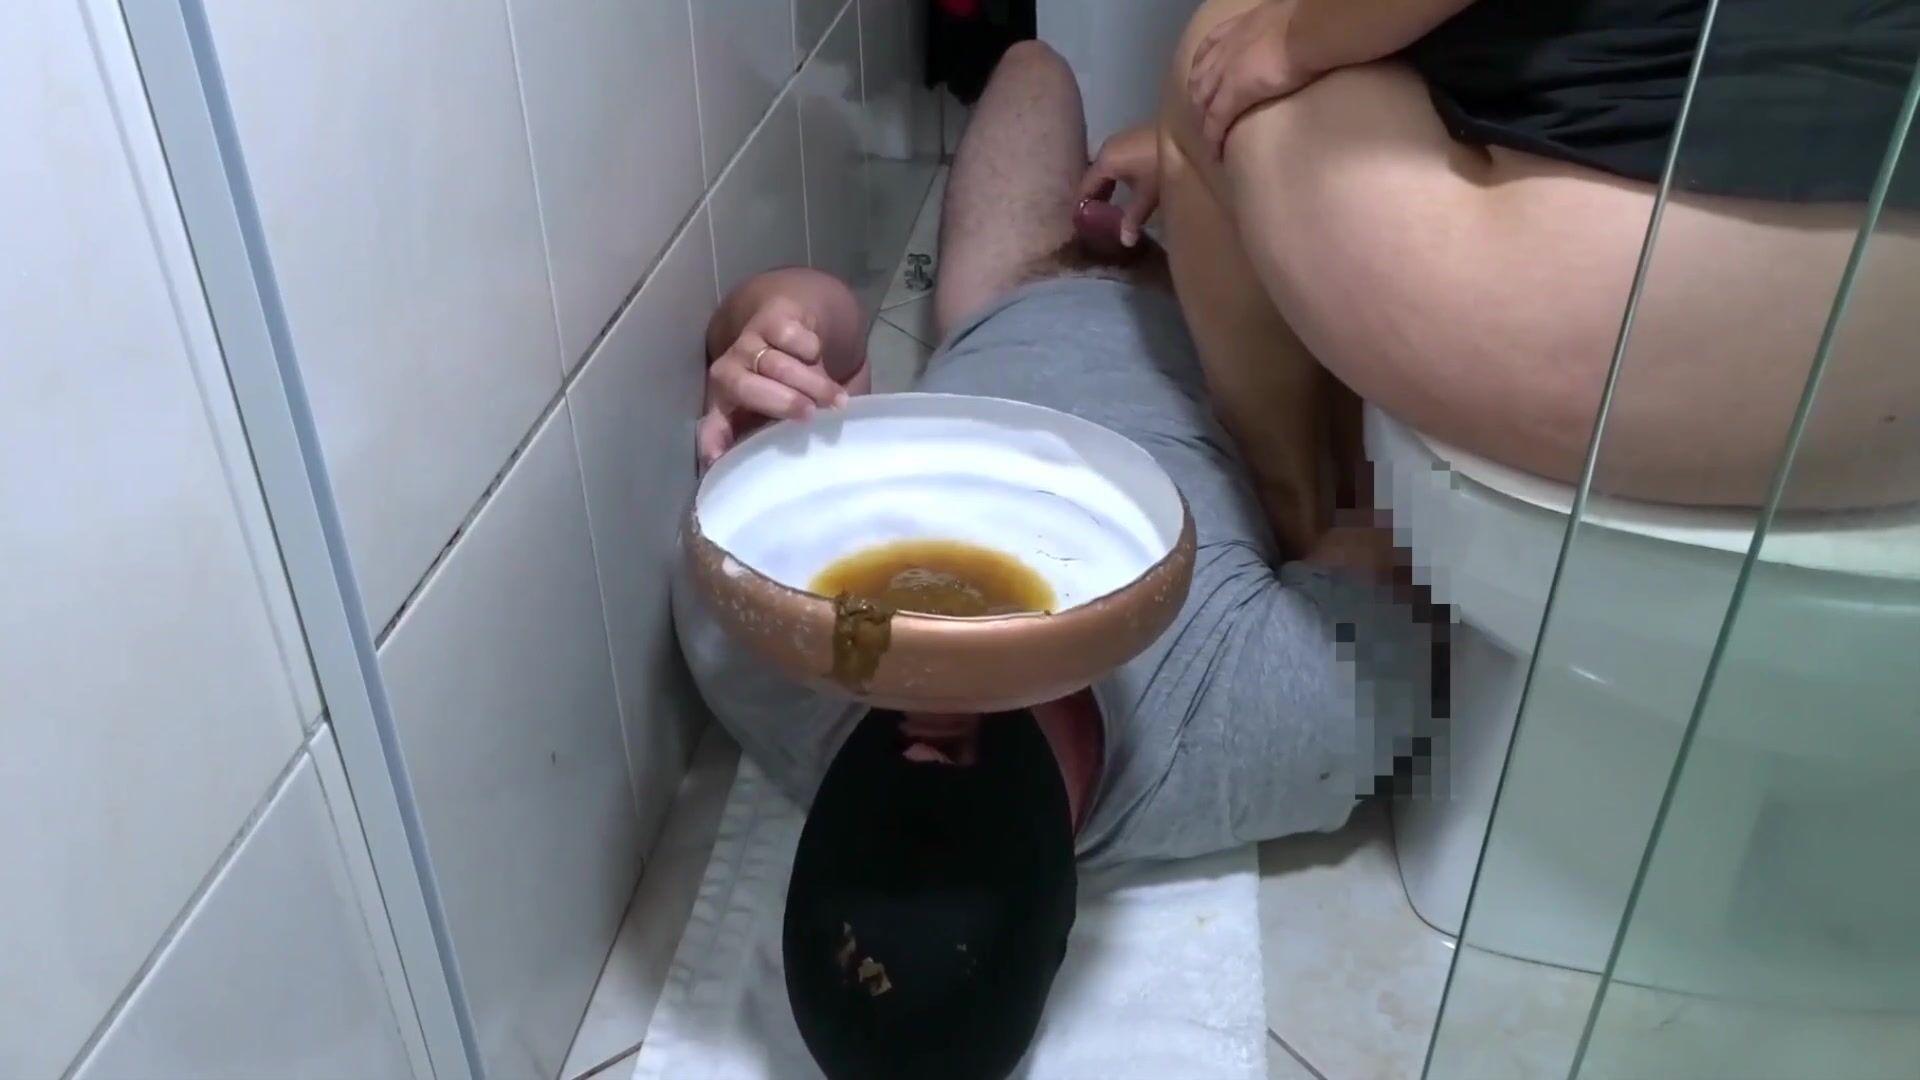 Human toilet scat feeding by femdom through ceramic funnel xxx -  PervertTube.com